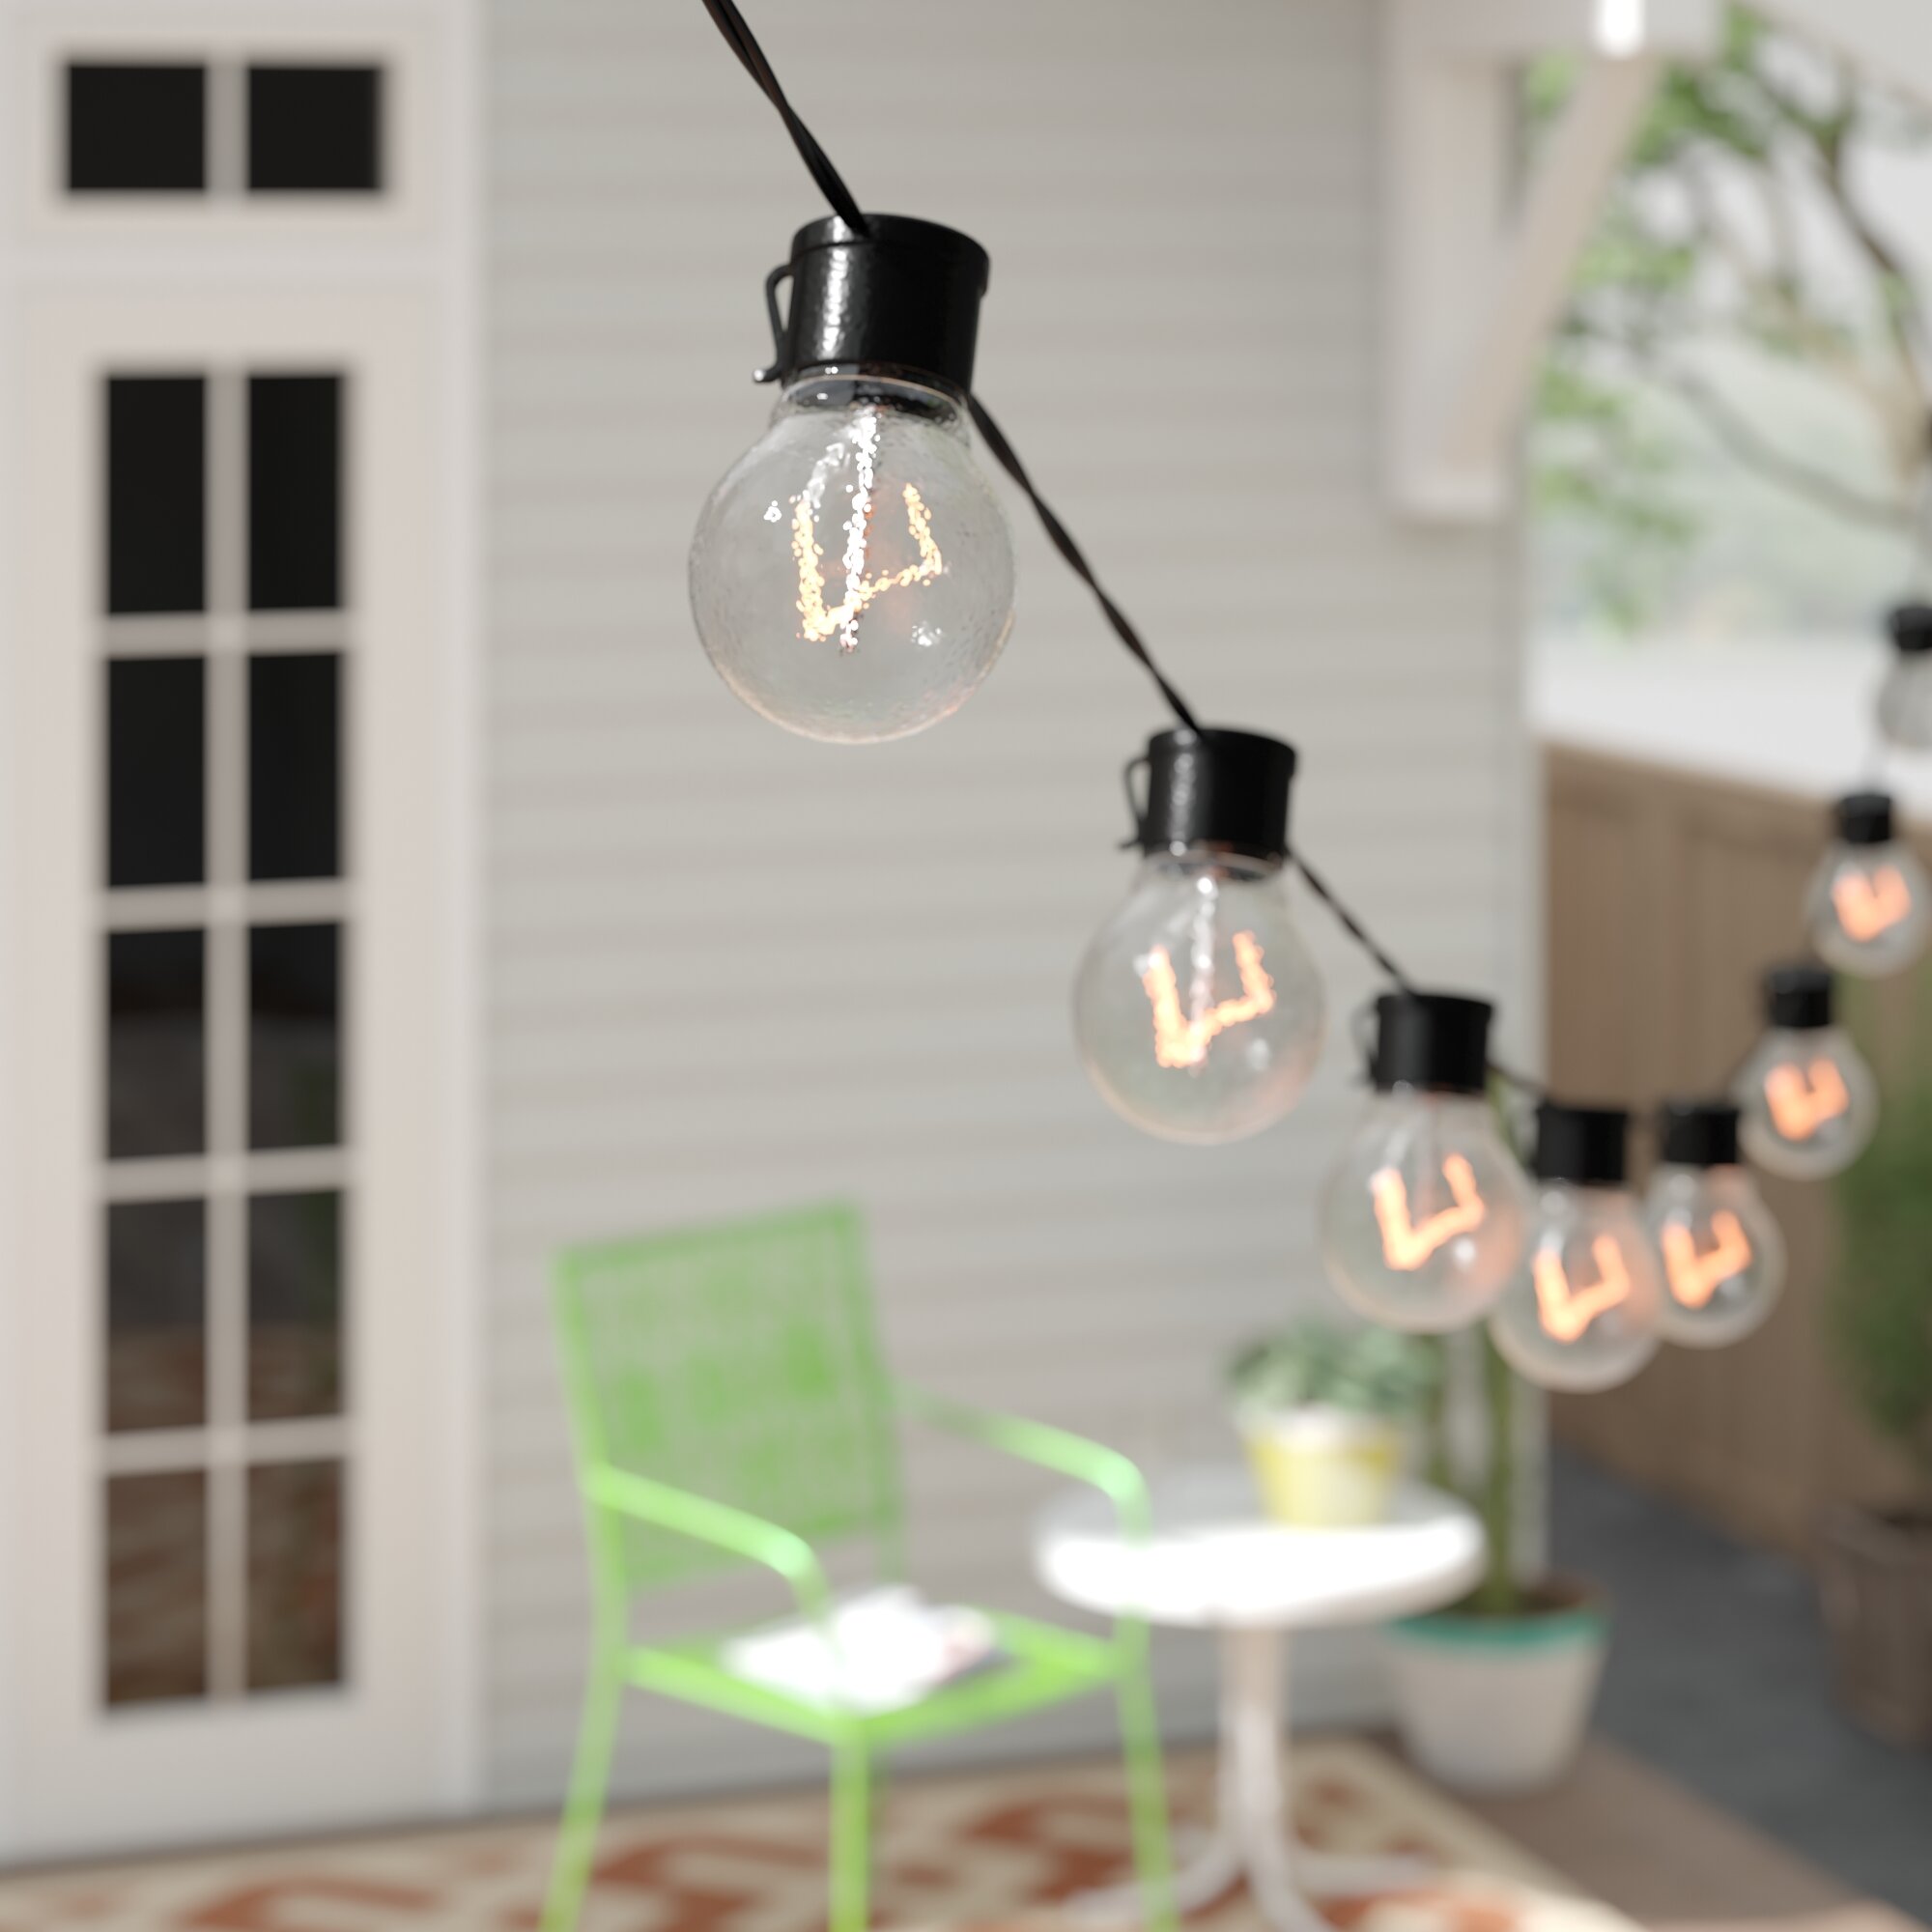 Solar Power 50 LED String Light Bulb Garden Path Yard Decor Lamp Home Outdoor